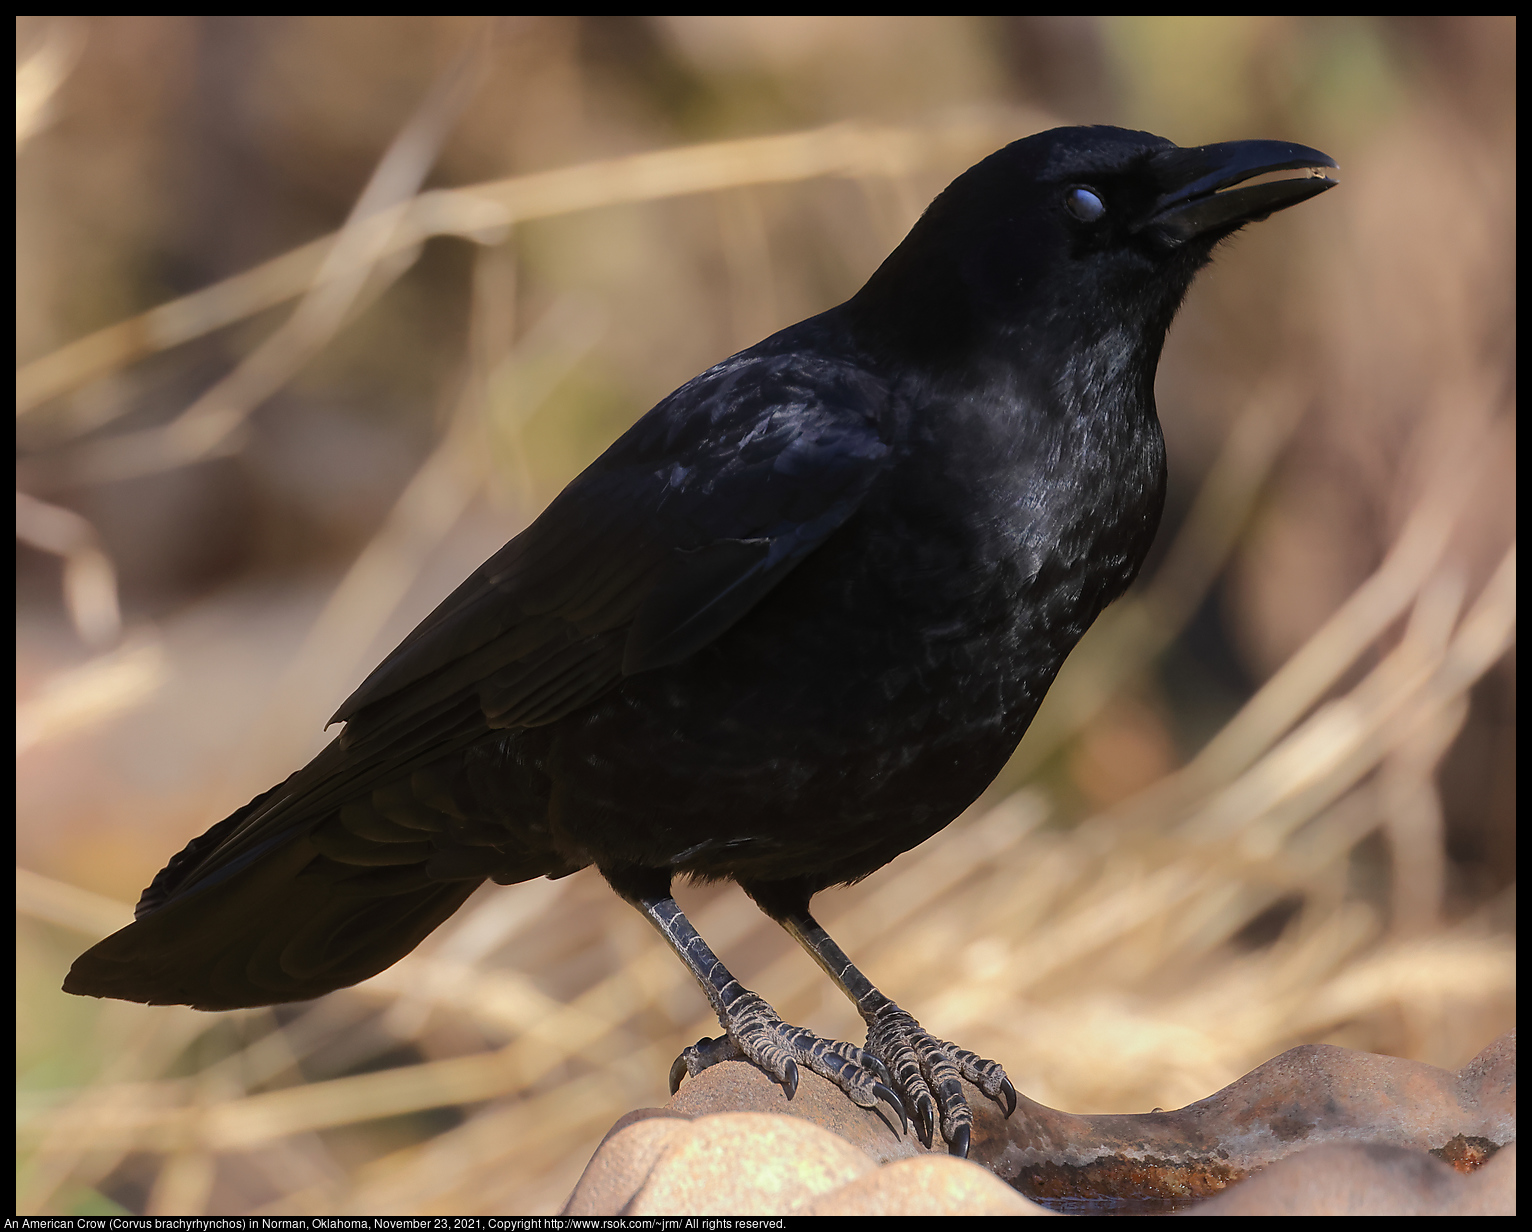 An American Crow (Corvus brachyrhynchos) in Norman, Oklahoma, November 23, 2021